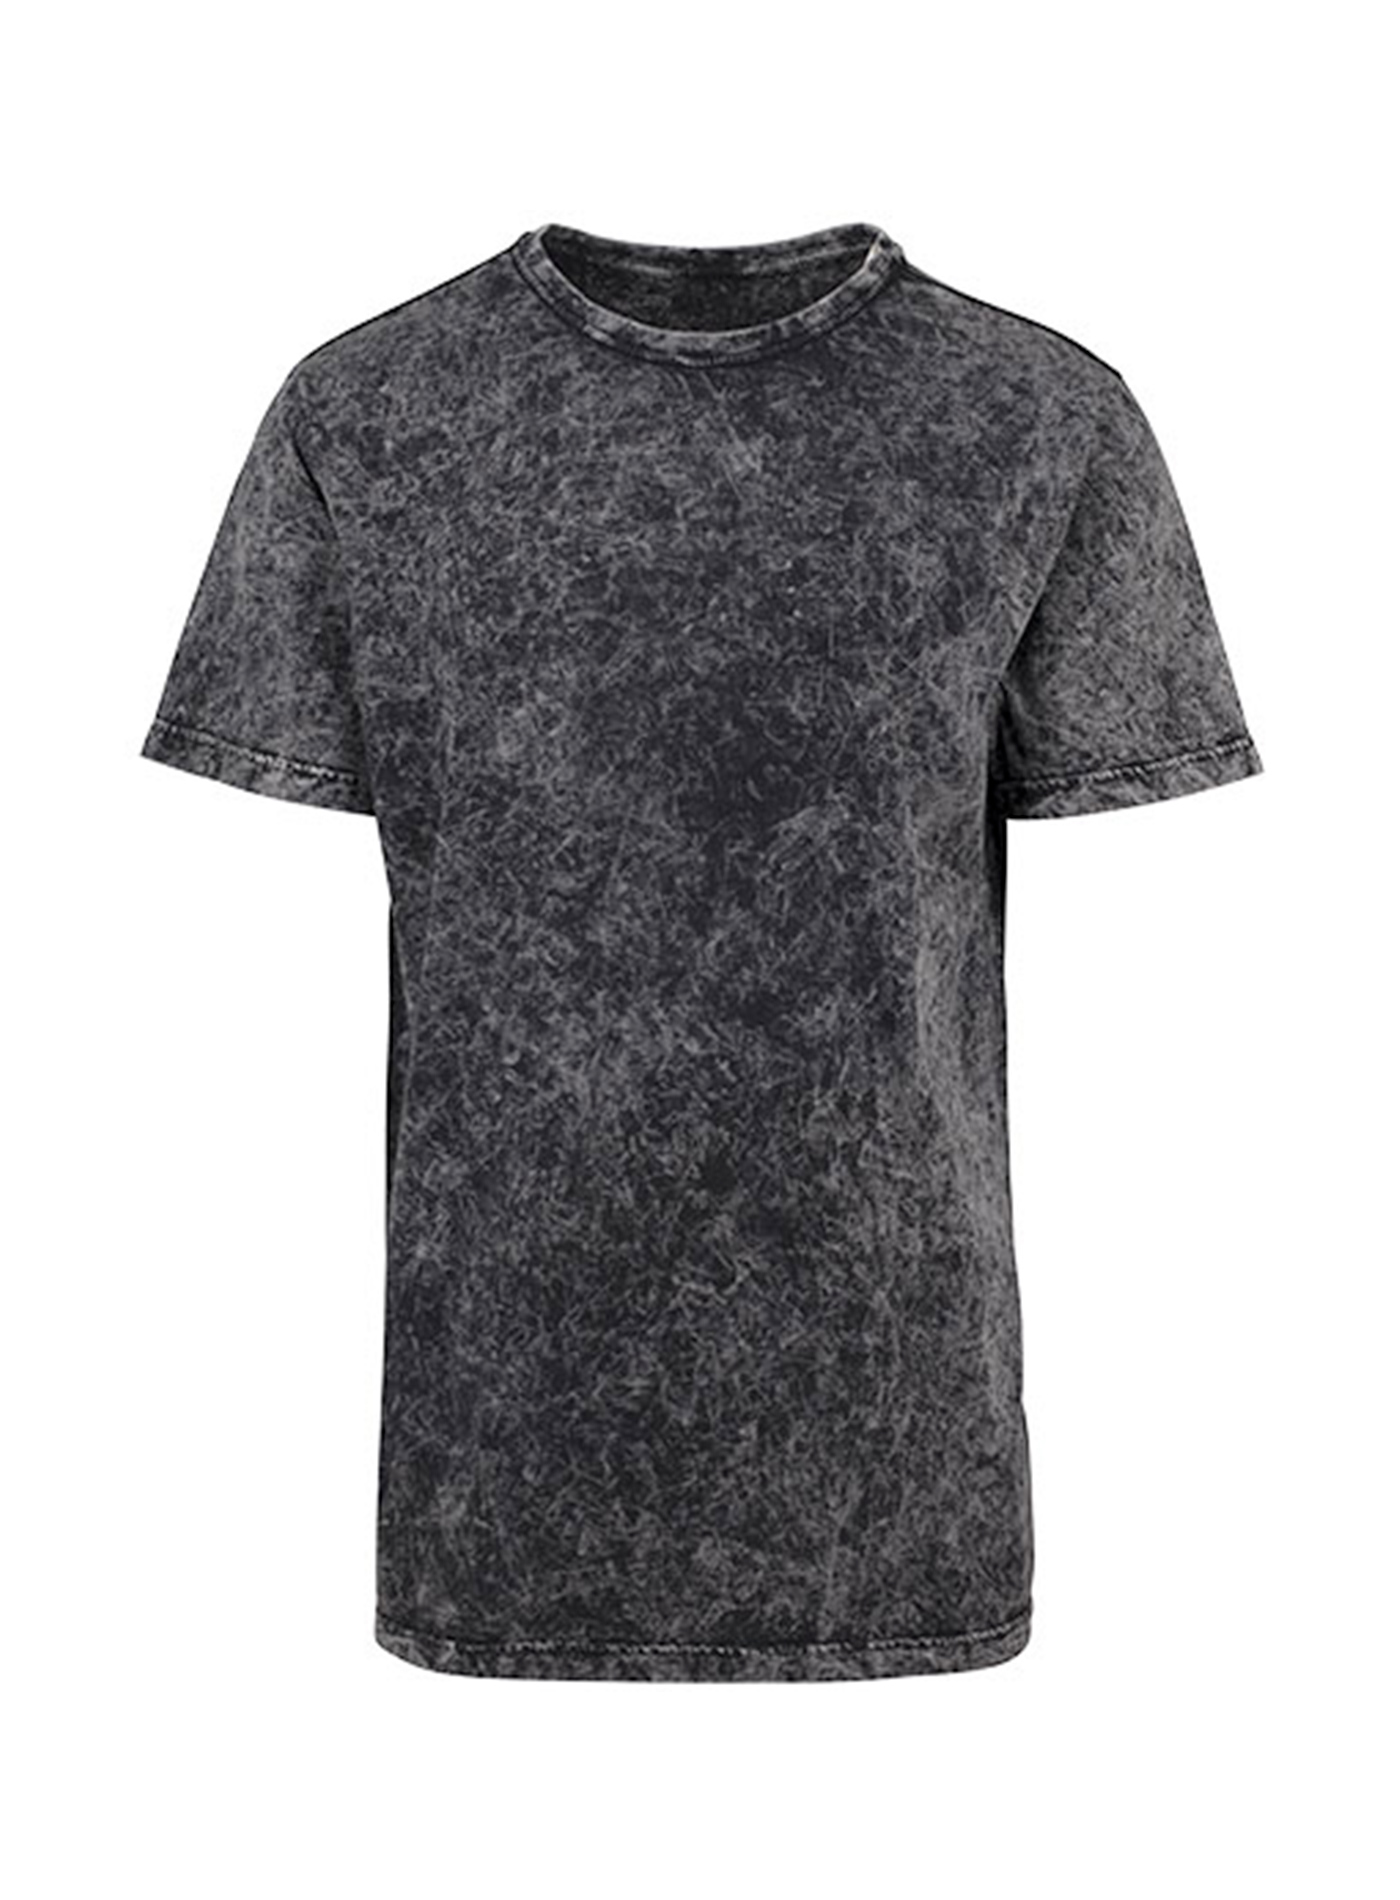 Pánské tričko Builted - Tmavě šedý melír M